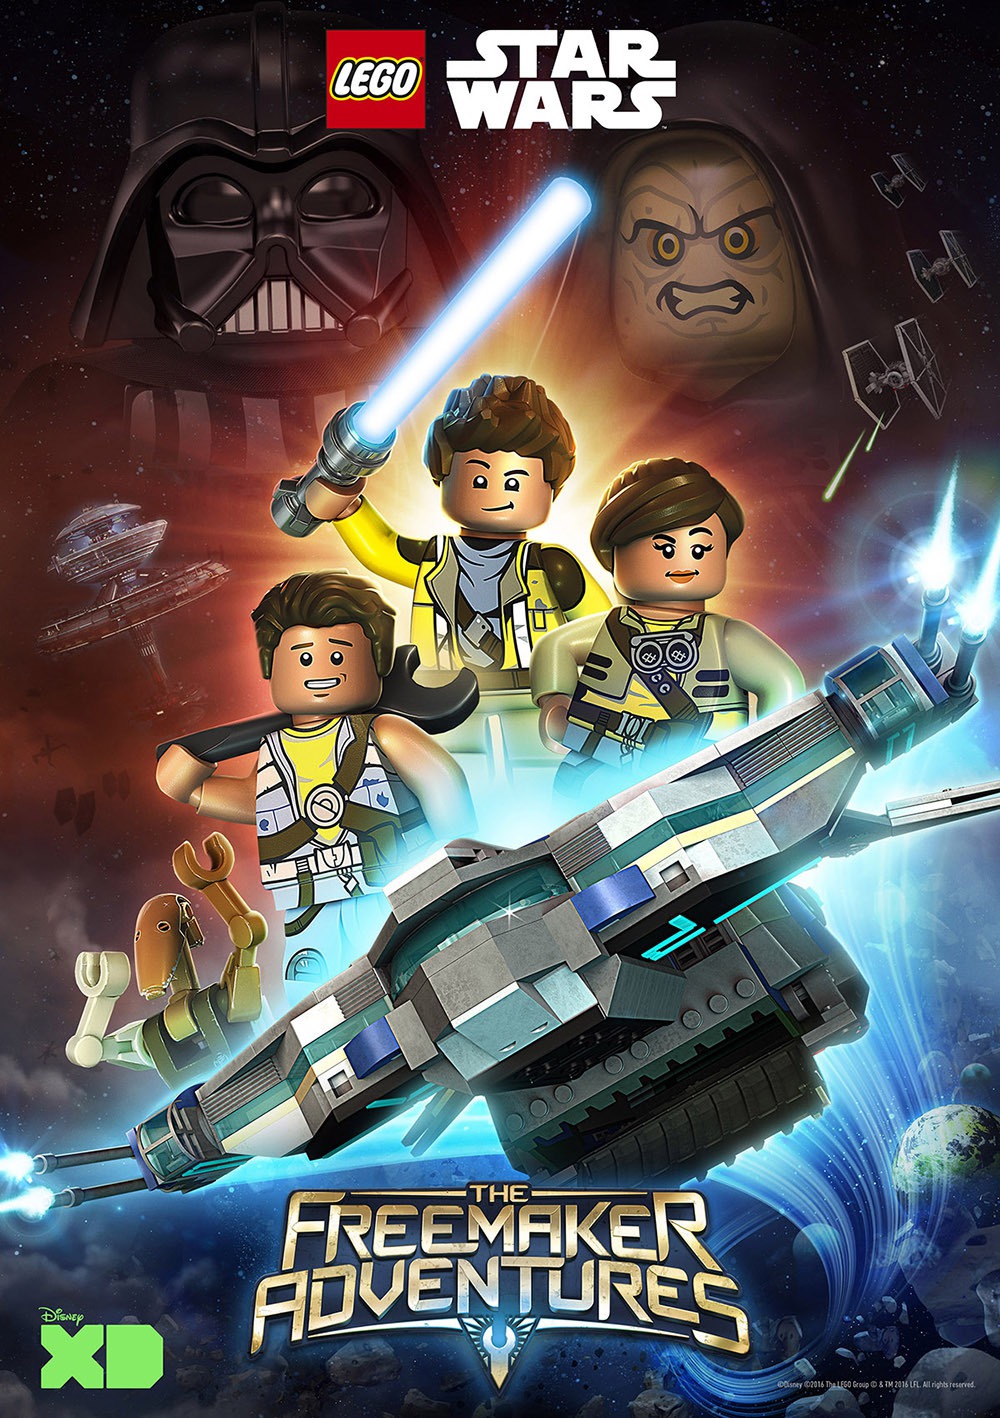 componente latitud cuidadosamente Iván Skywalker on Twitter: "Lego Star Wars: The Freemaker Adventures -  Póster de la 1ª Temporada. https://t.co/2IVbSCSWs7" / Twitter